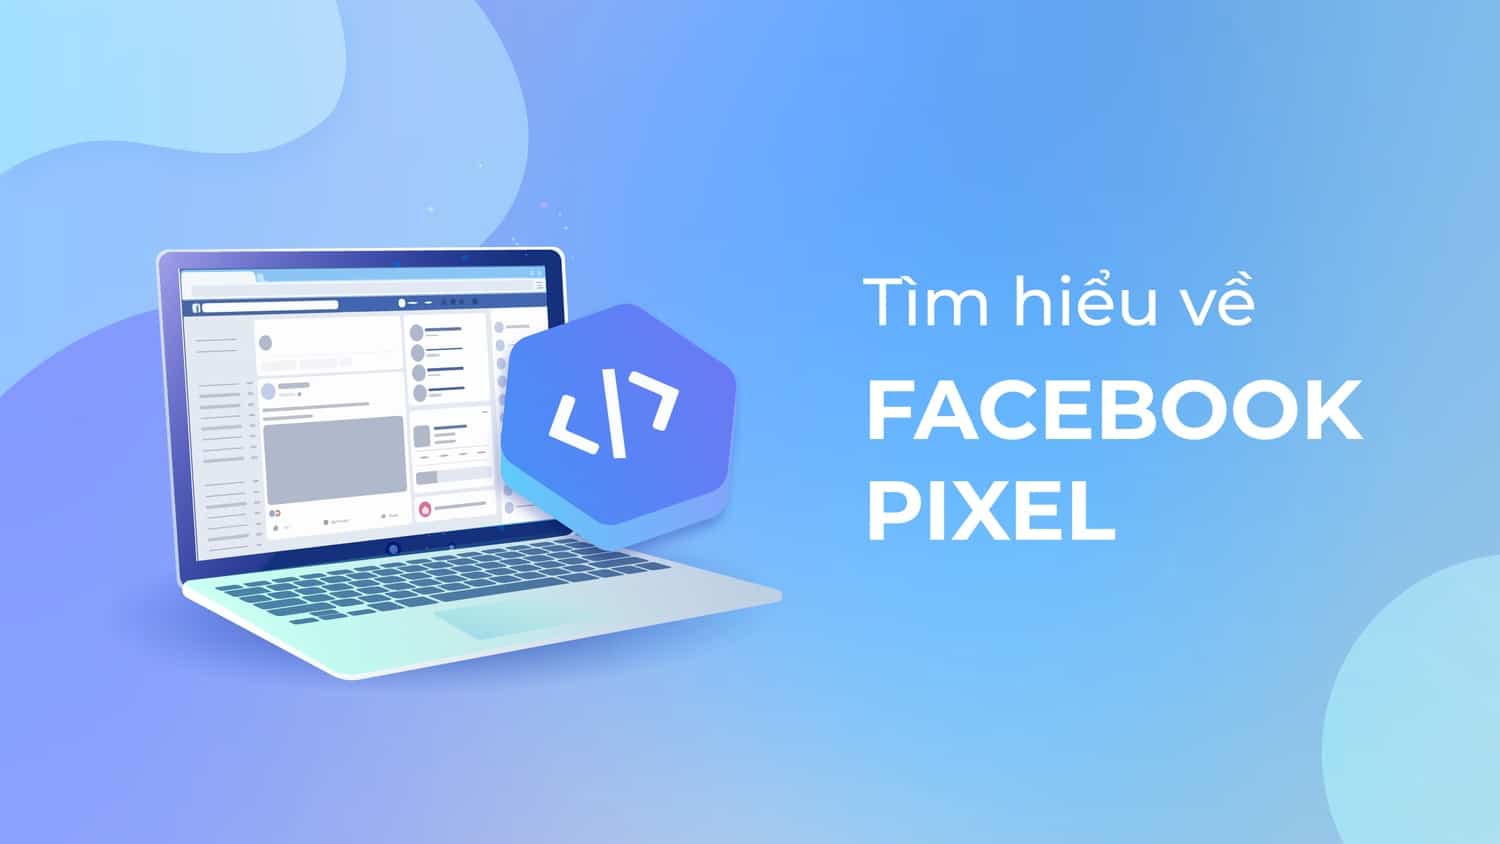 pixel facebook là gì?